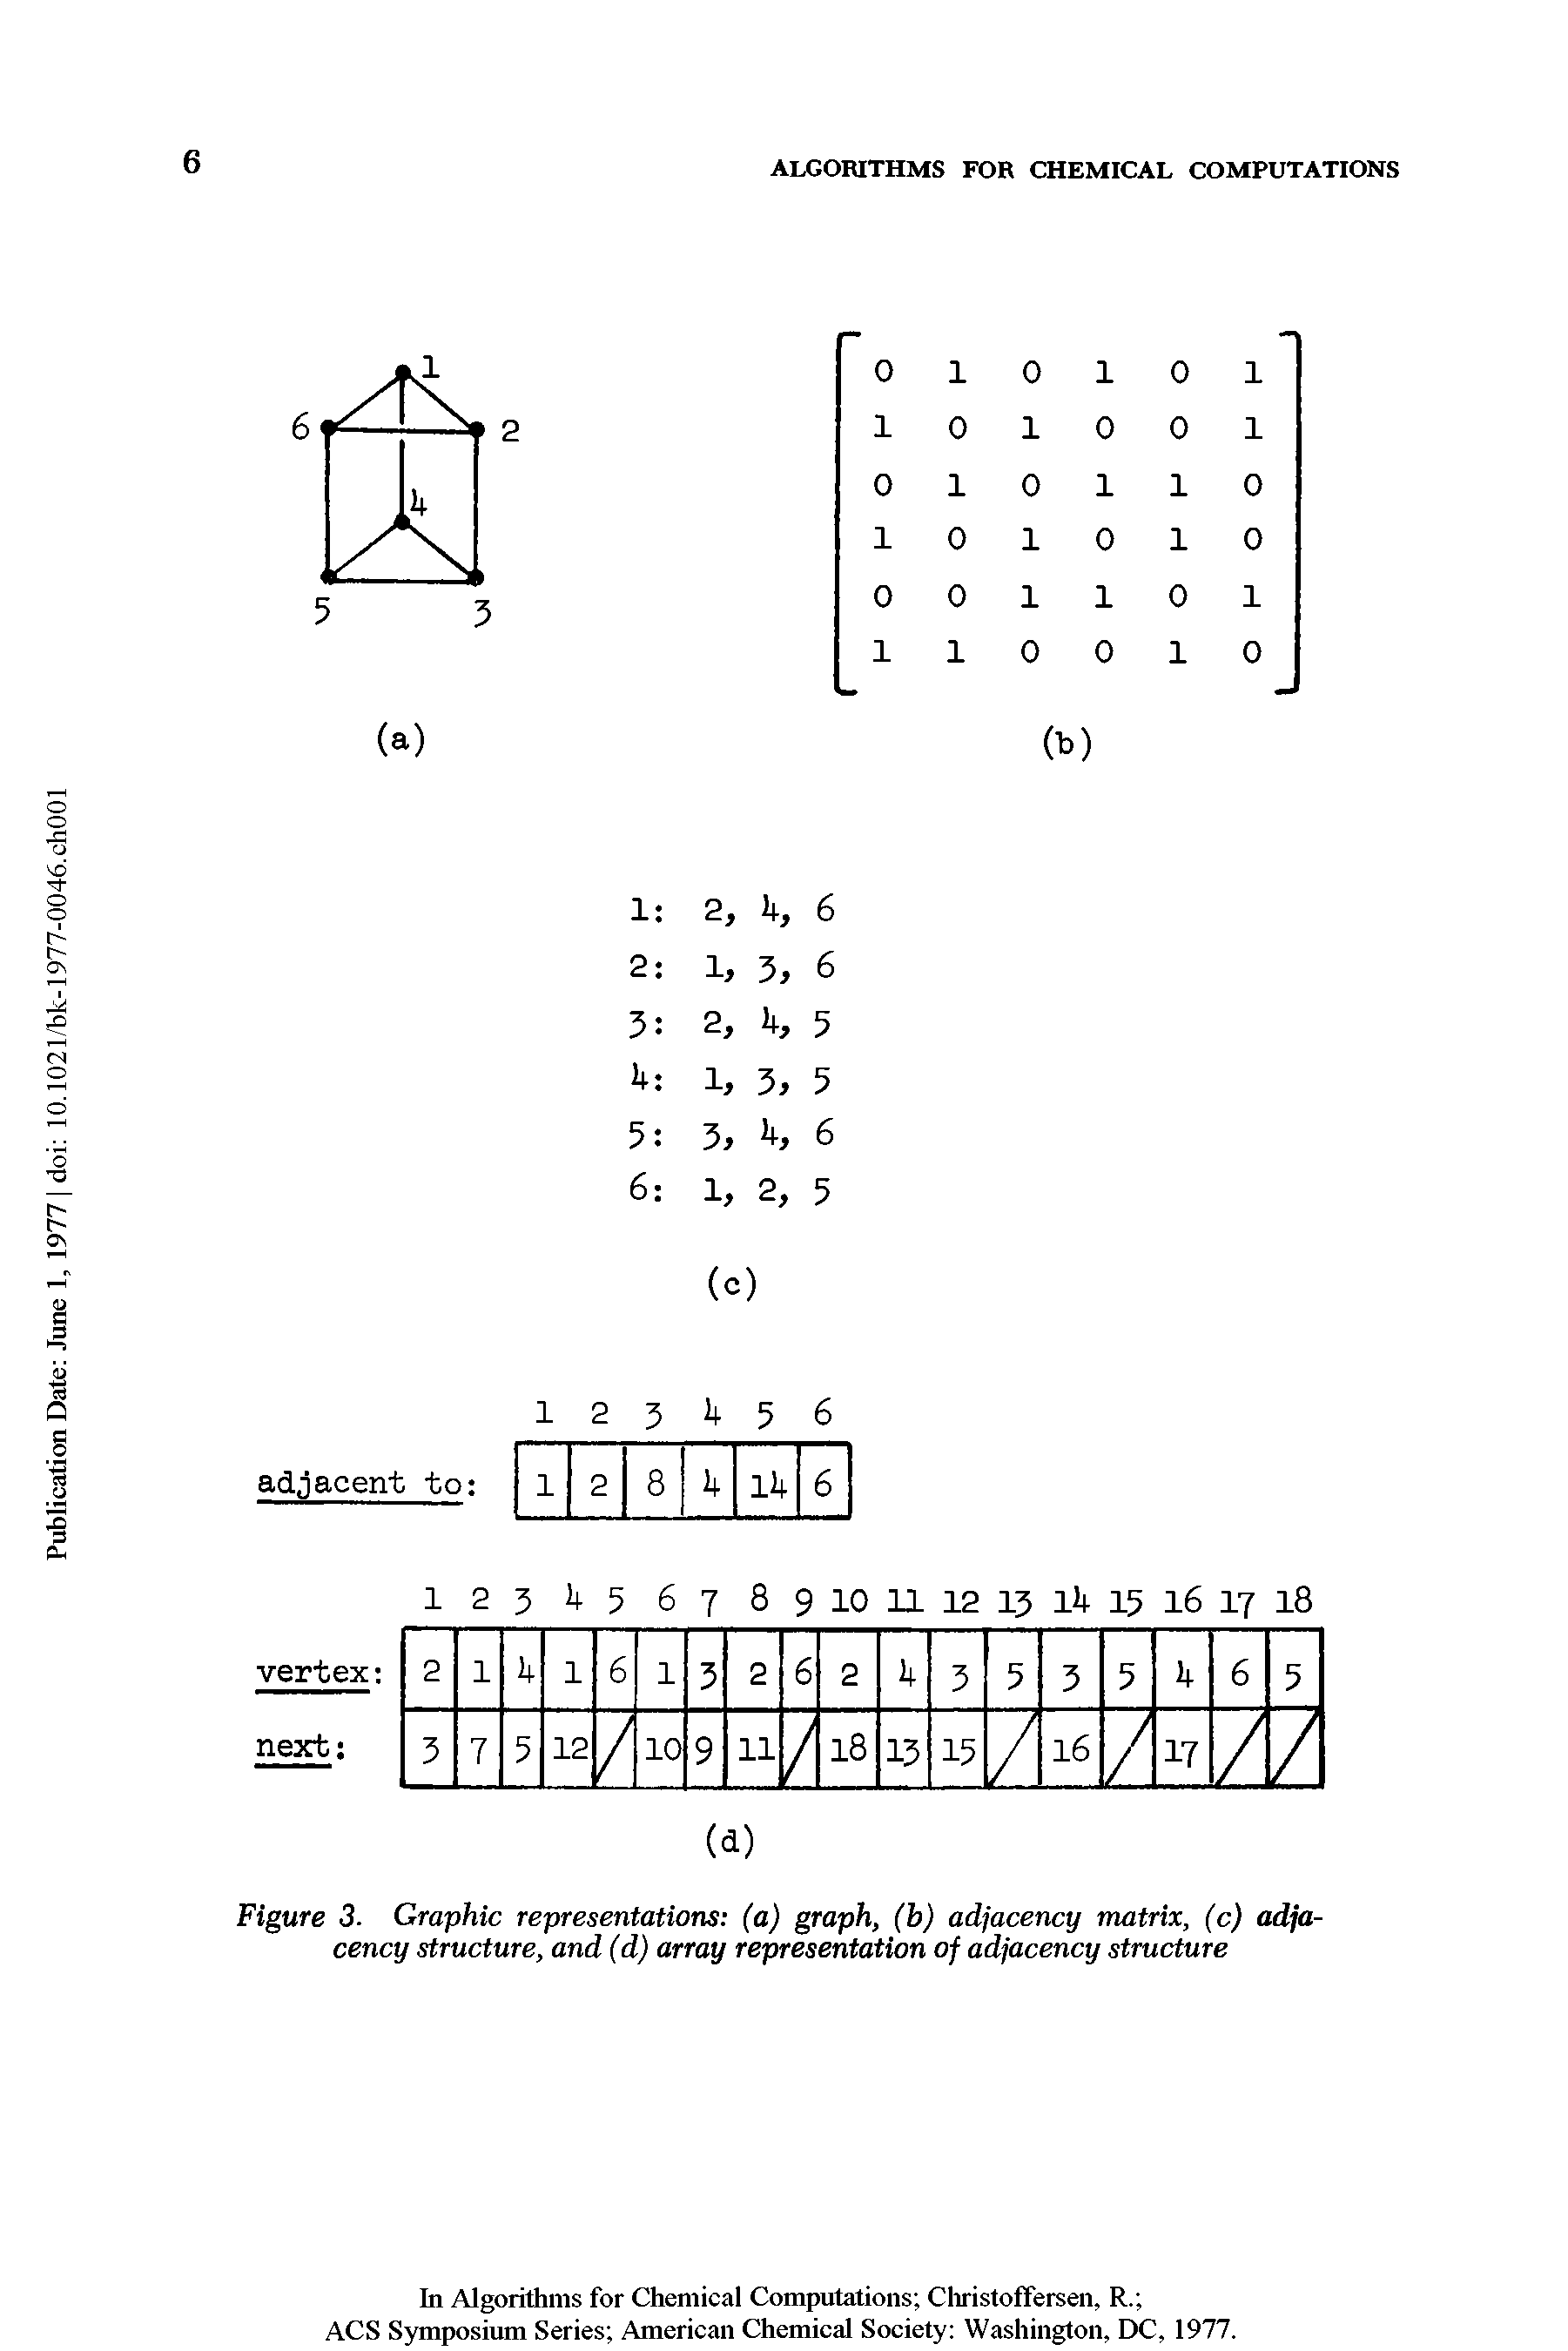 Figure 3. Graphic representations (a) graph, (b) adjacency matrix, (c) adjacency structure, and (d) array representation of adjacency structure...